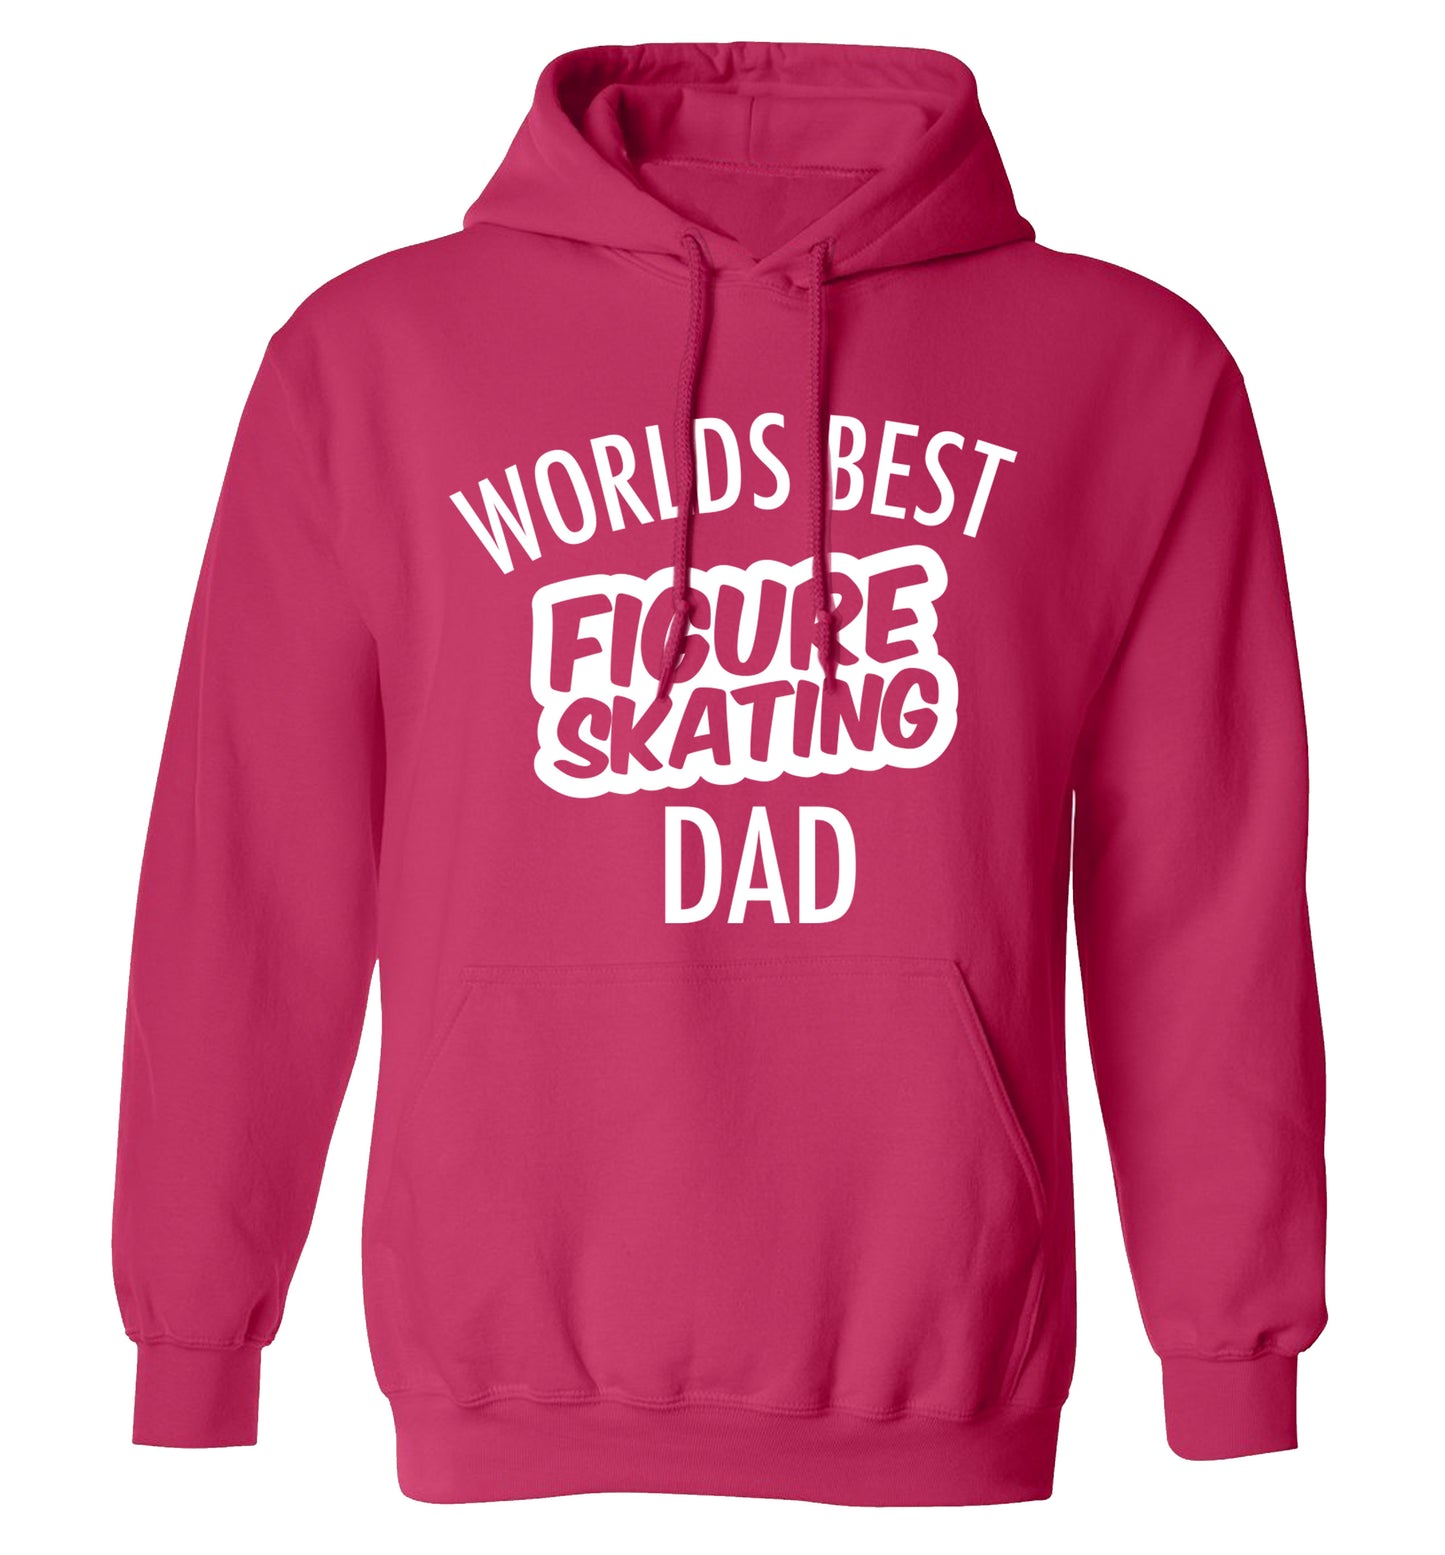 Worlds best figure skating dad adults unisexpink hoodie 2XL